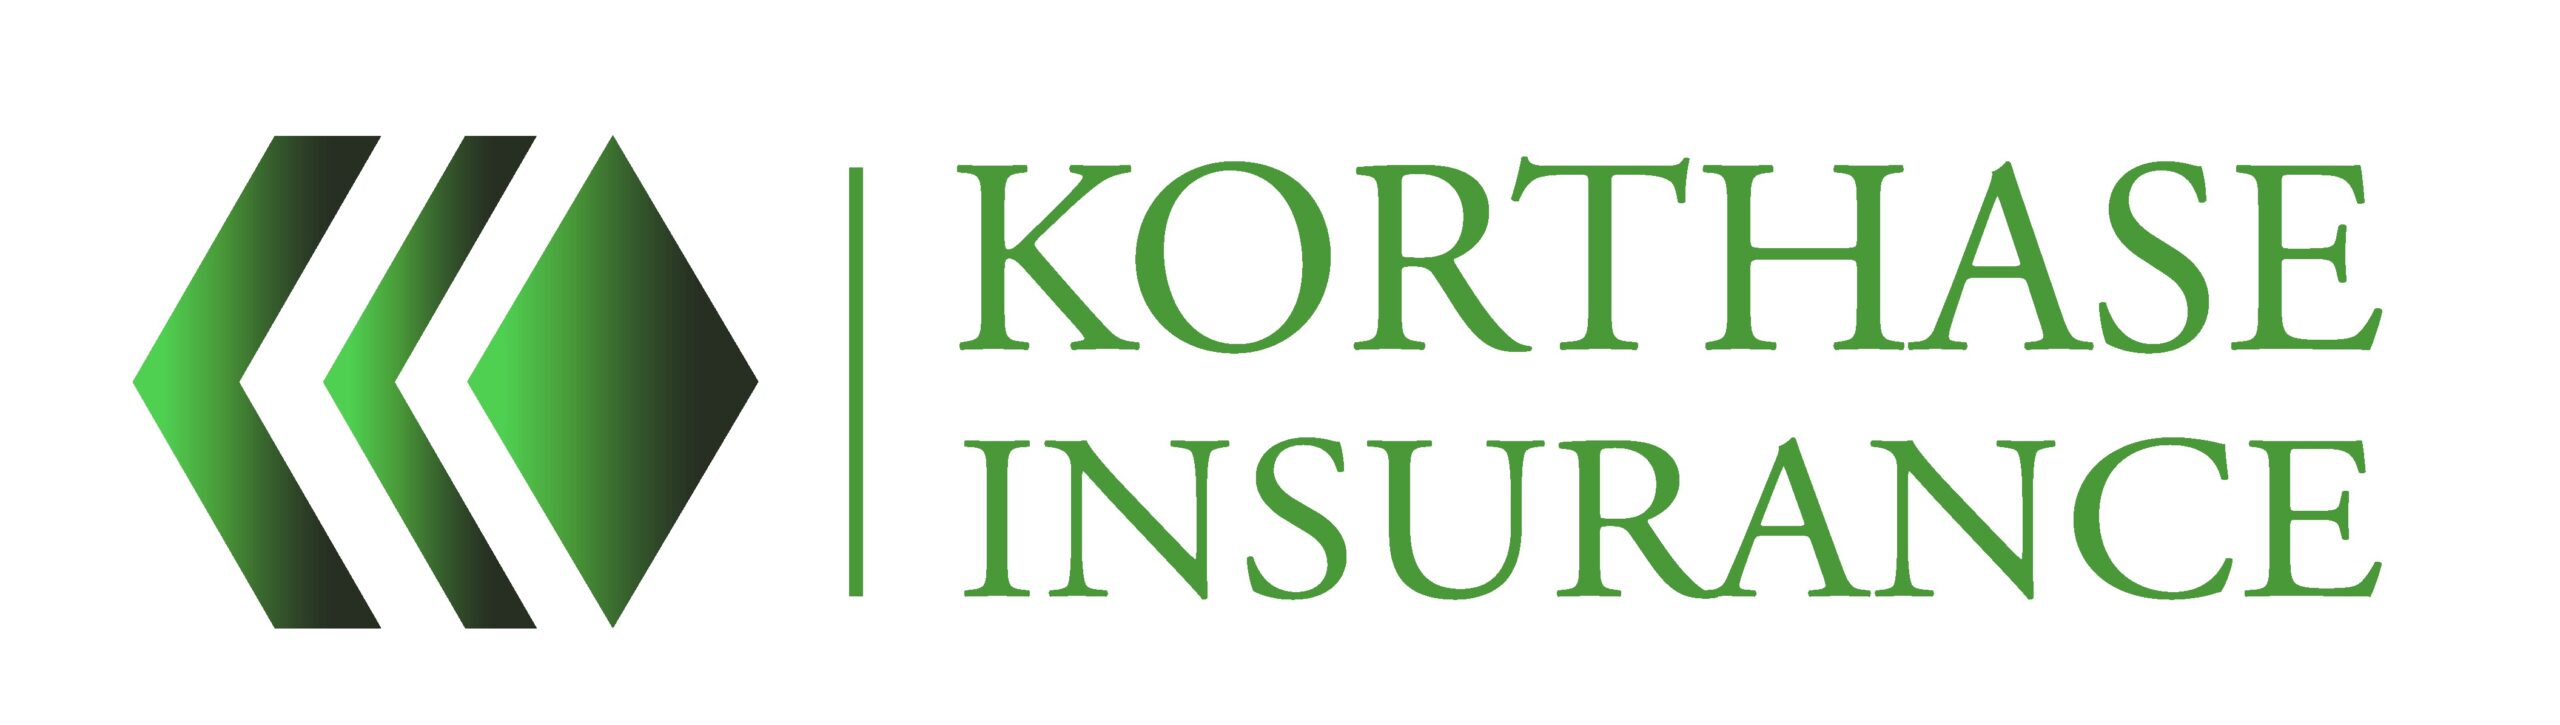 Korthase Insurance